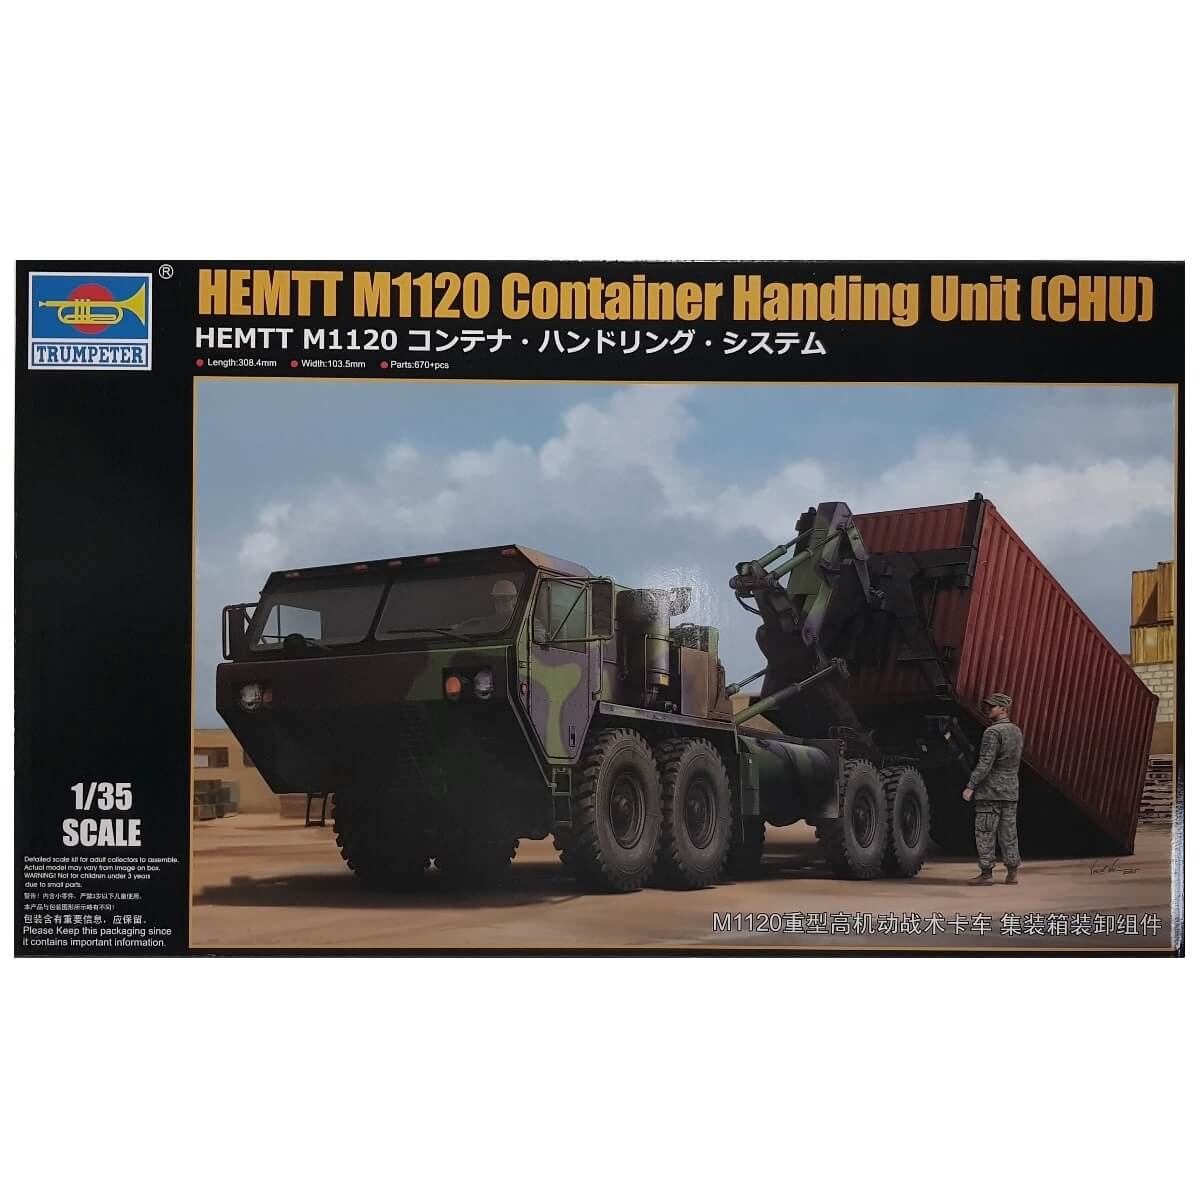 1:35 HEMTT M1120 Container Handling Unit (CHU) - TRUMPETER